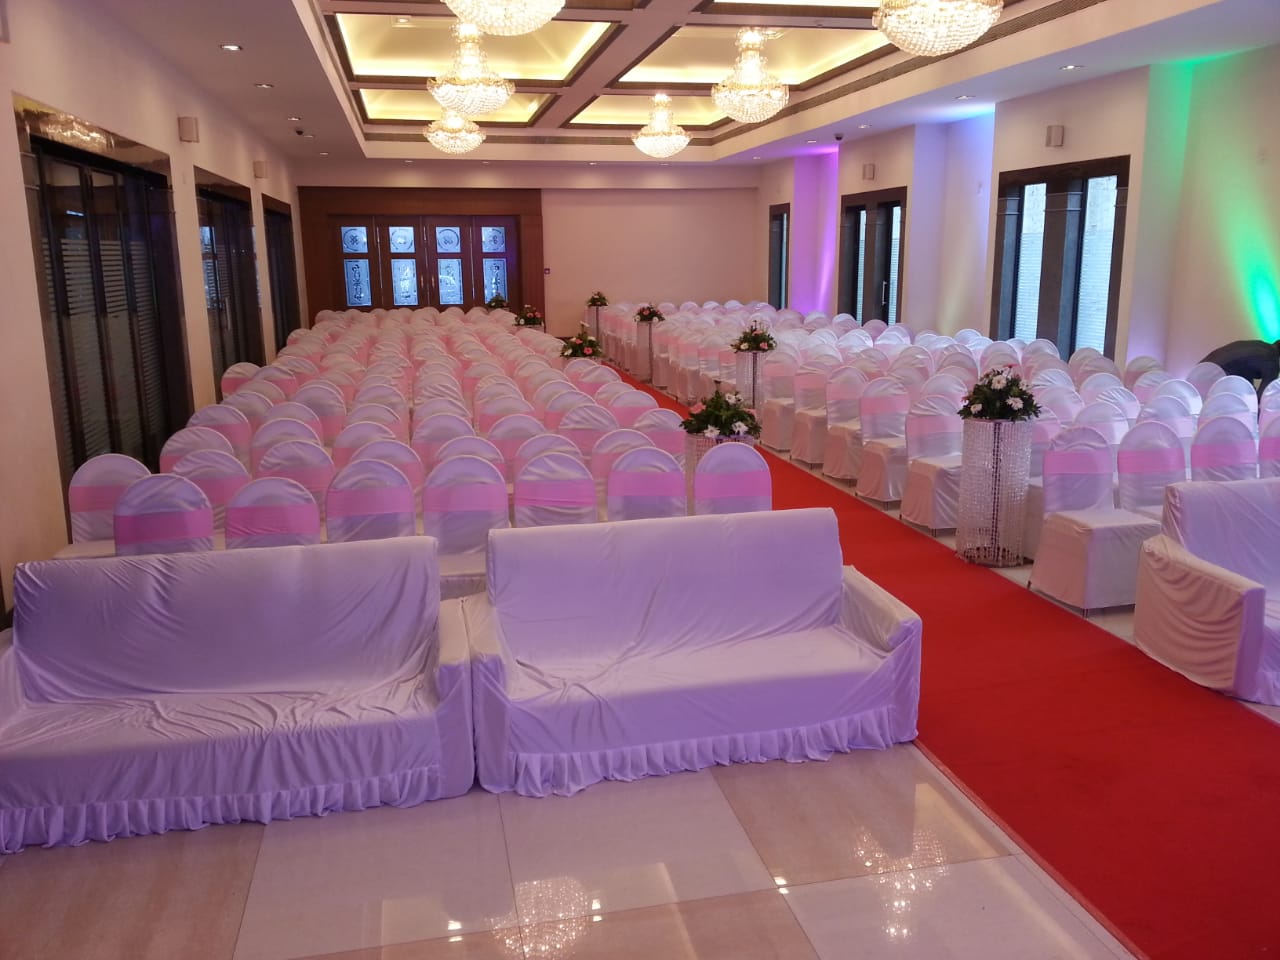 Maharaja Banquet Hall Mira Road Mumbai | Banquet Hall | Menu, Price,  Reviews & Availability